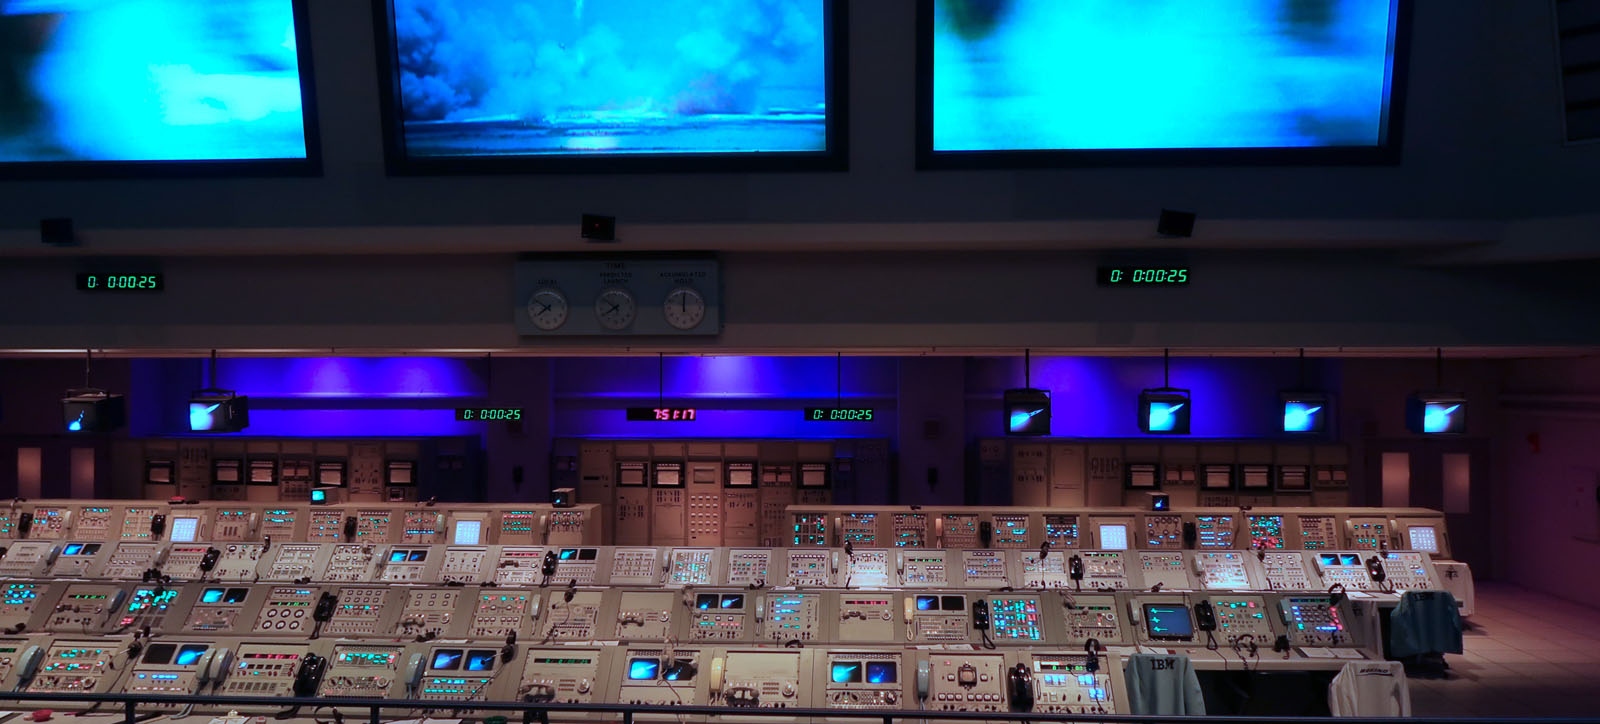 The NASA control room